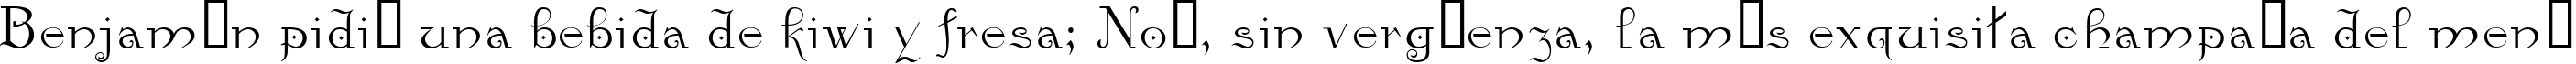 Пример написания шрифтом Kamelia текста на испанском